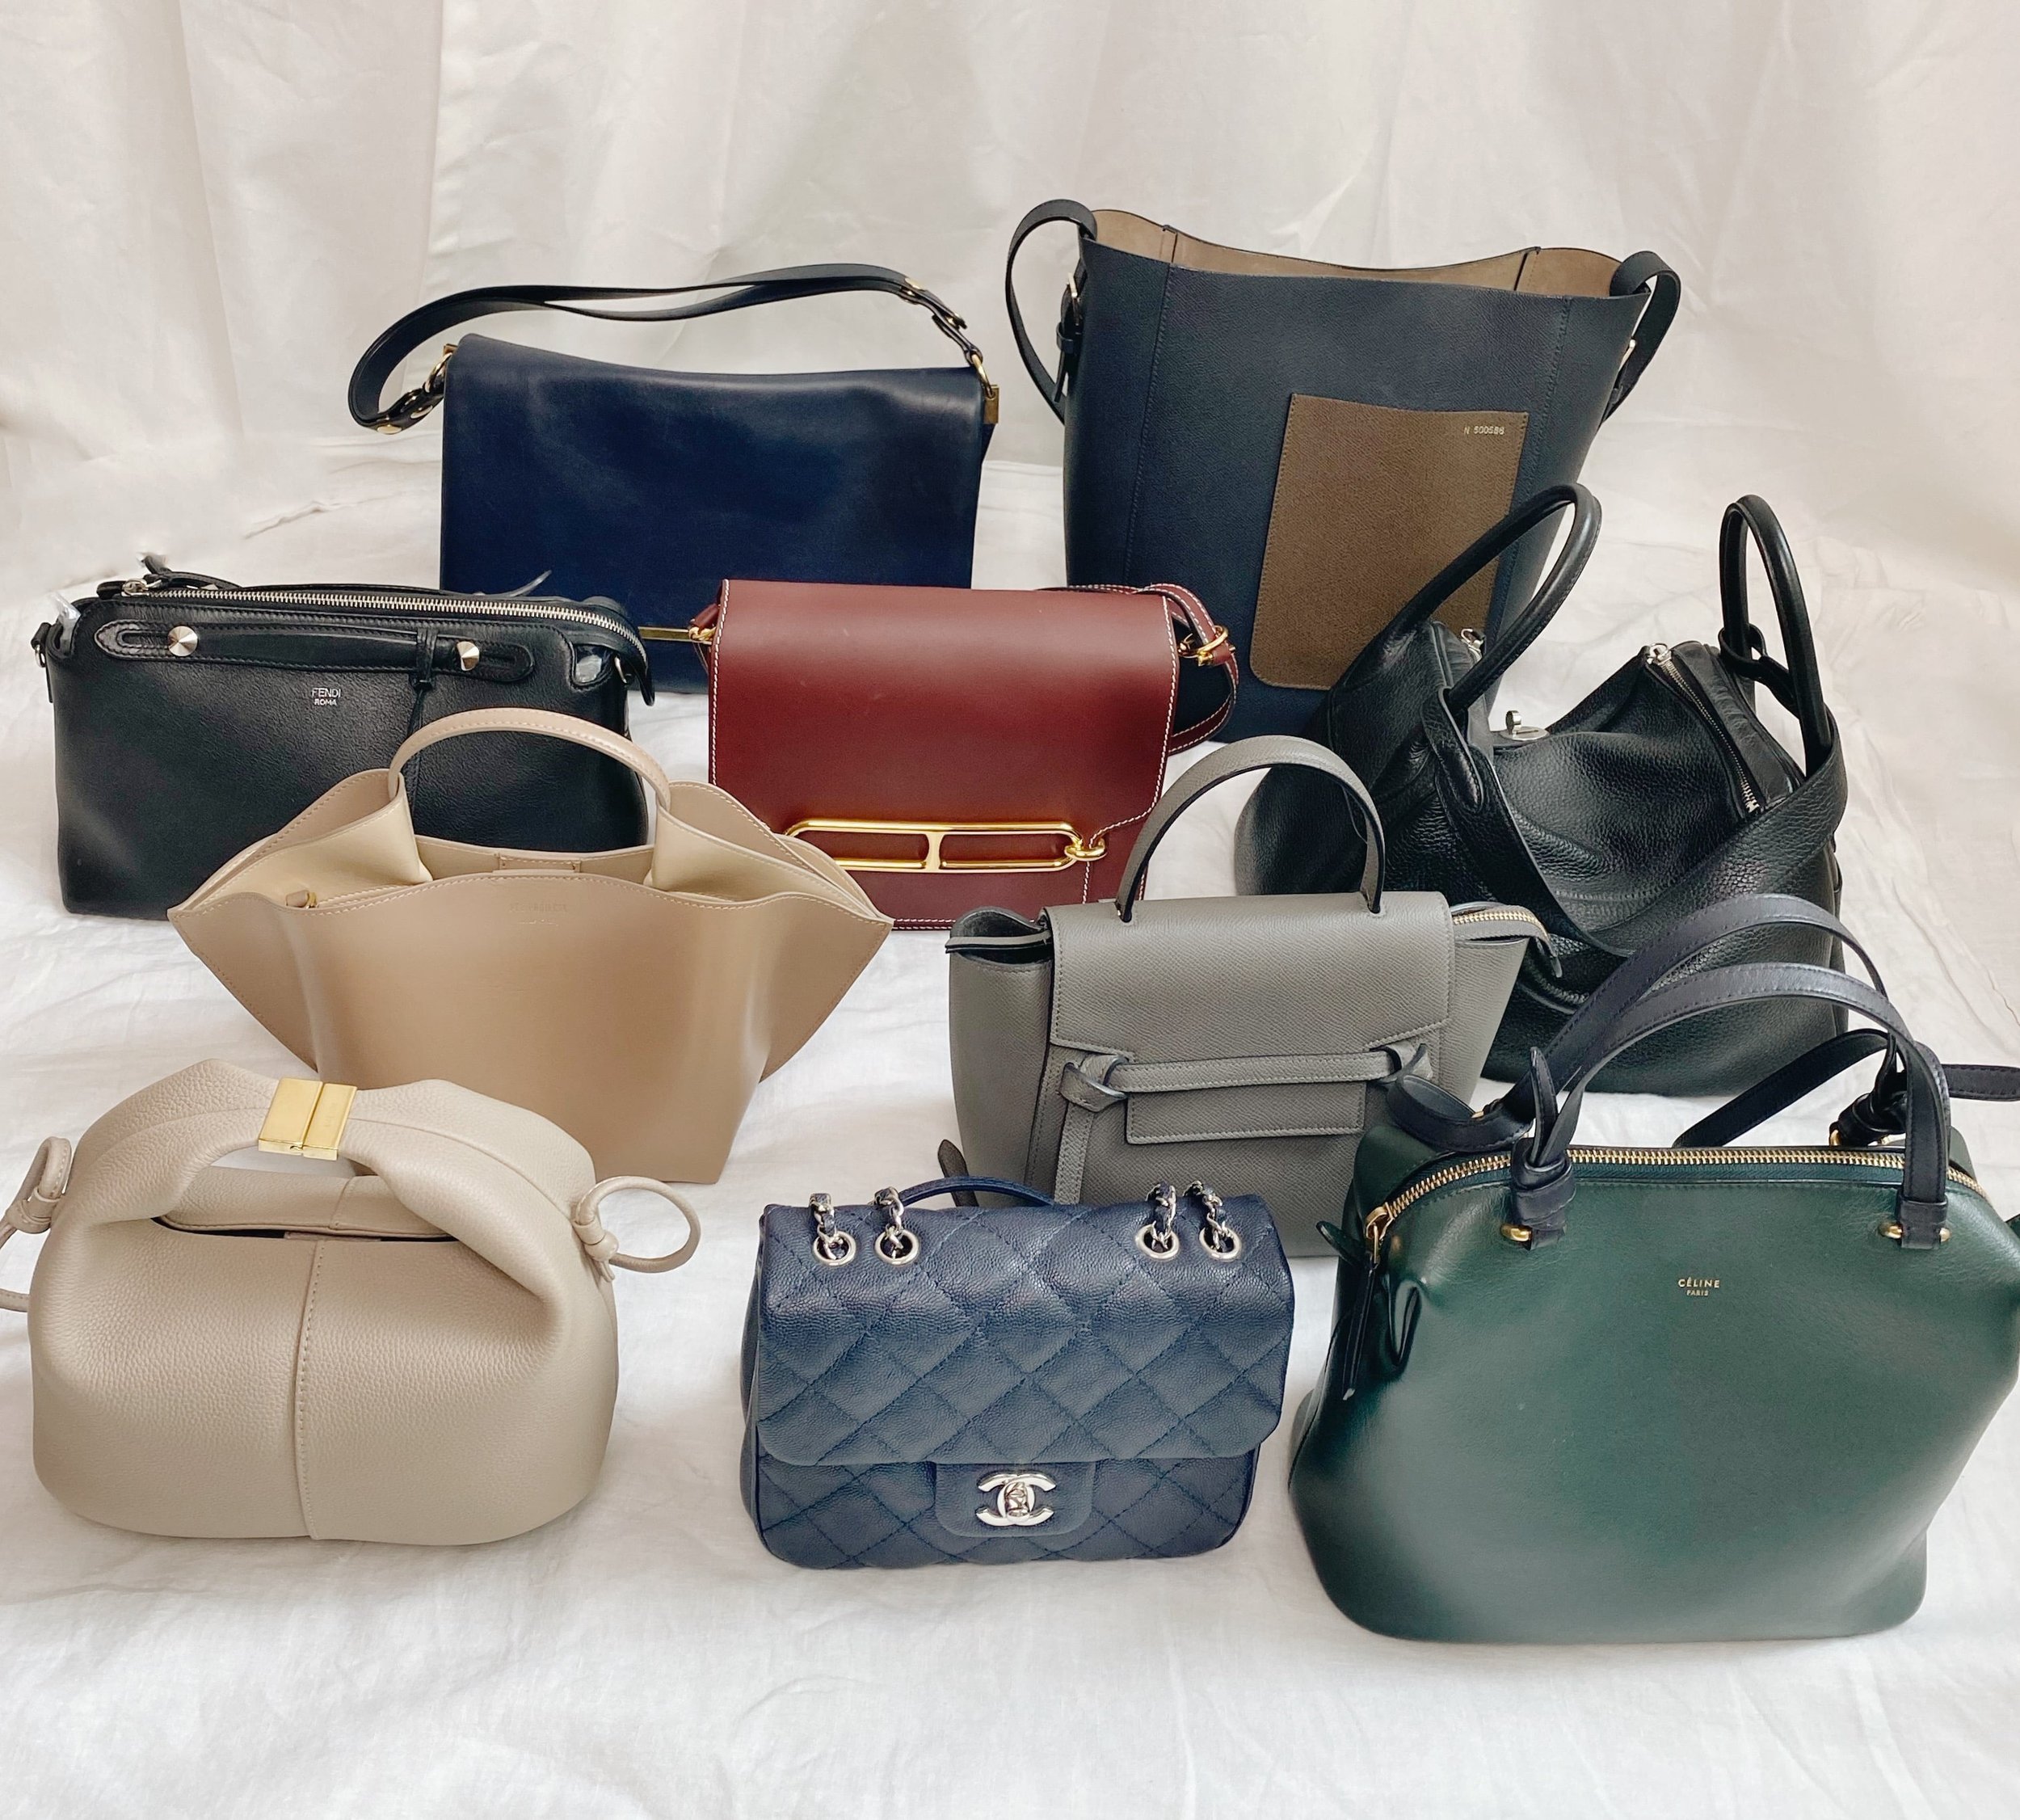 Buy luxury bag without luxury price tag (Polene)